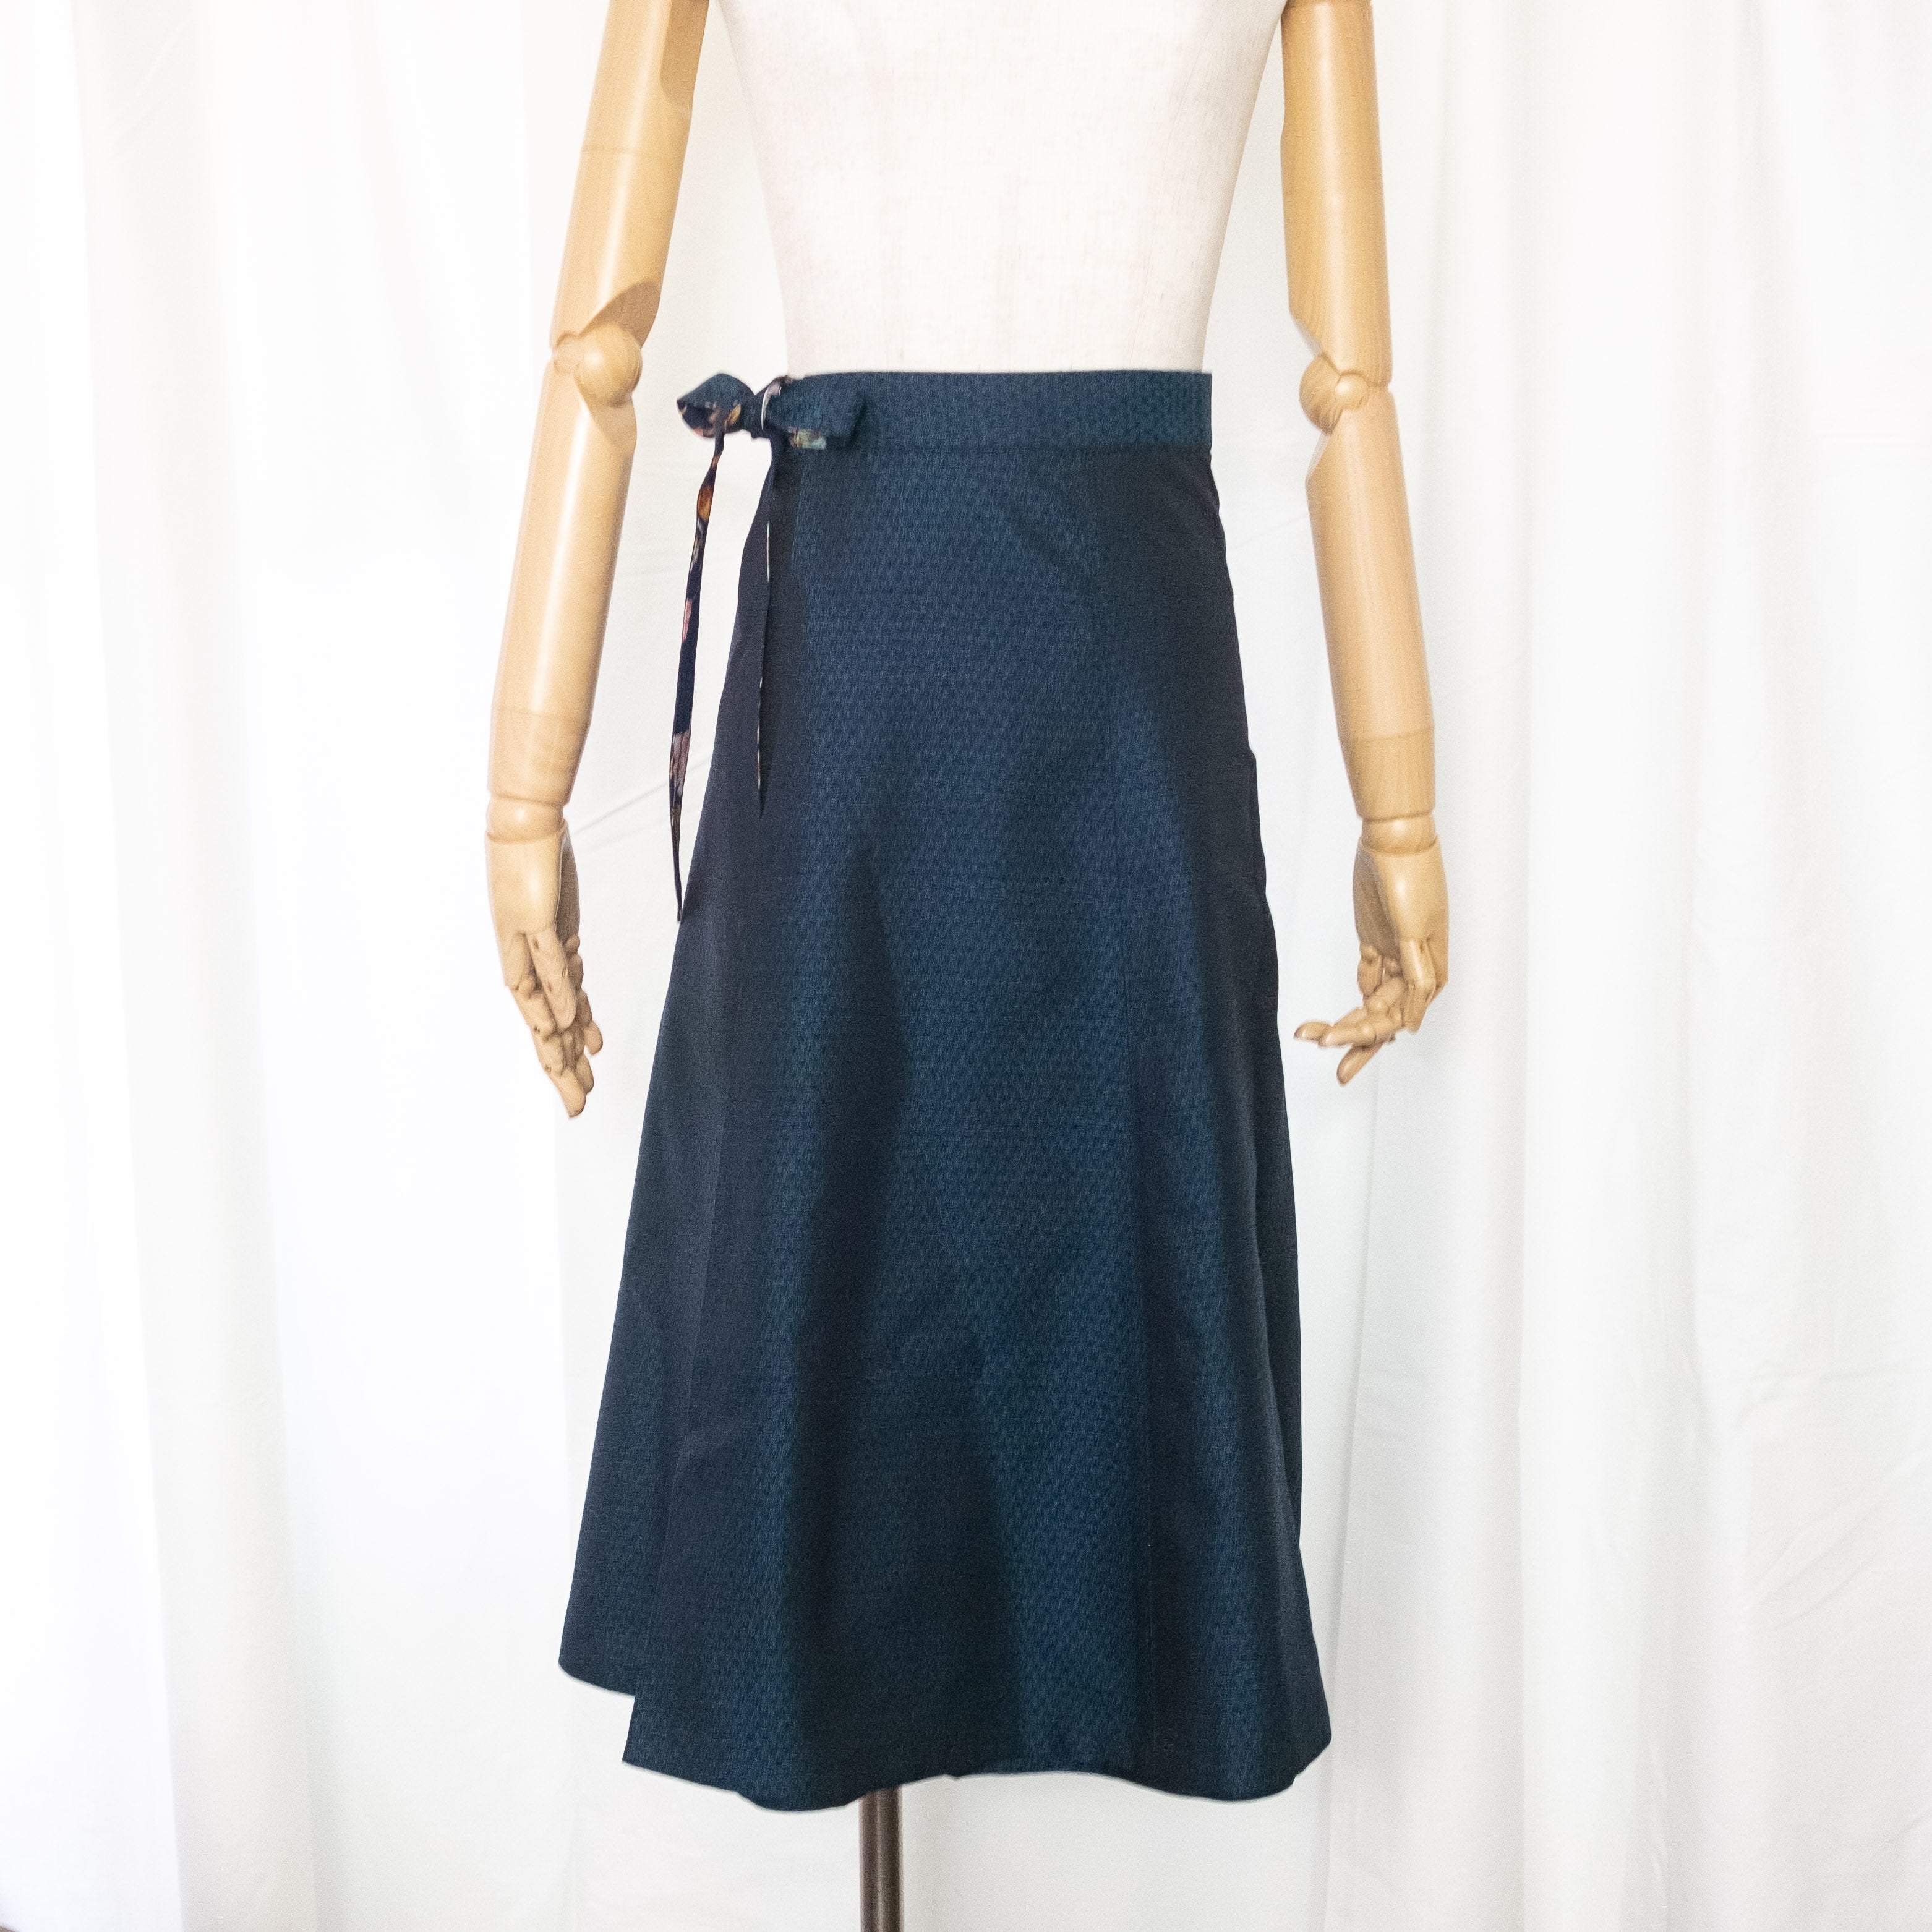 Reversible Skirt Flare - Fiori Navy